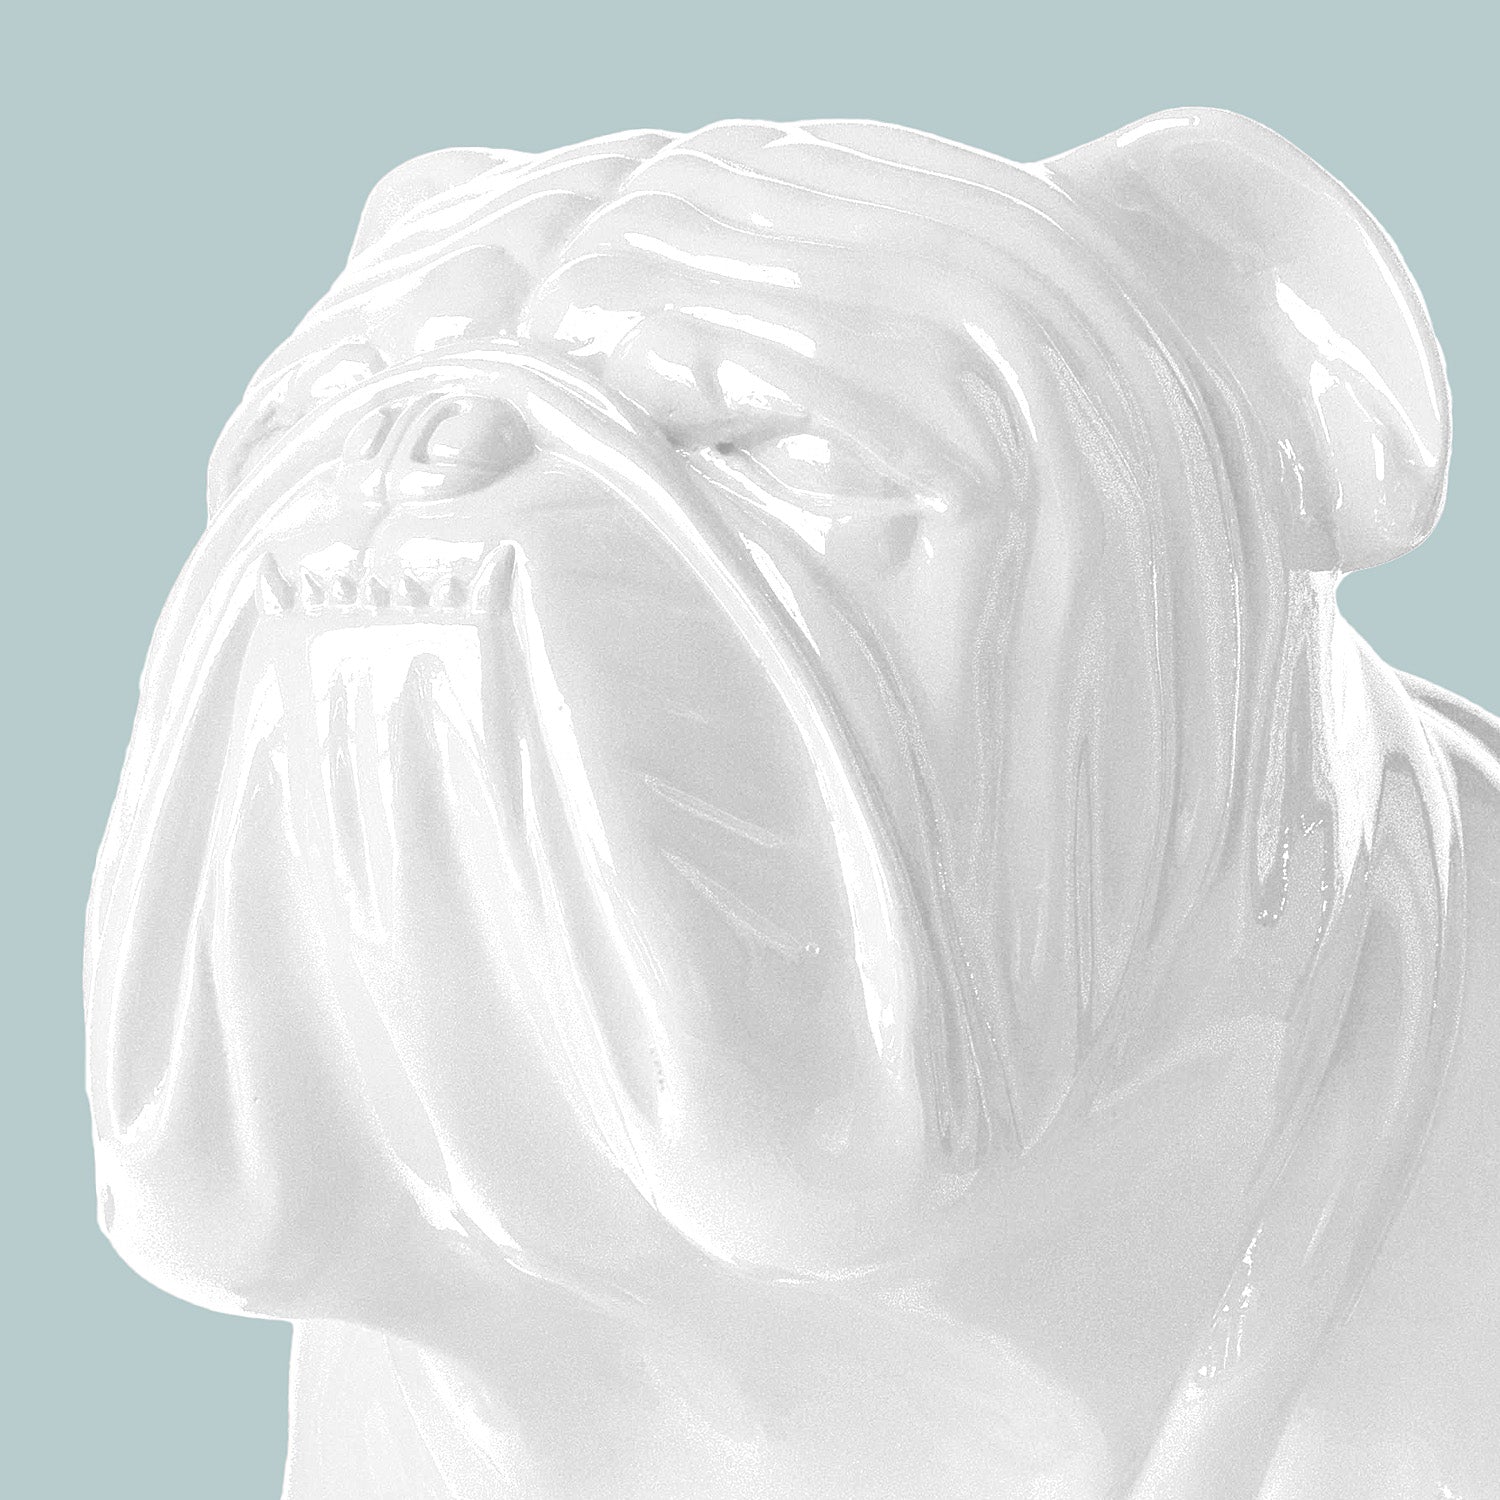 Bulldog Sculpture, White, MD